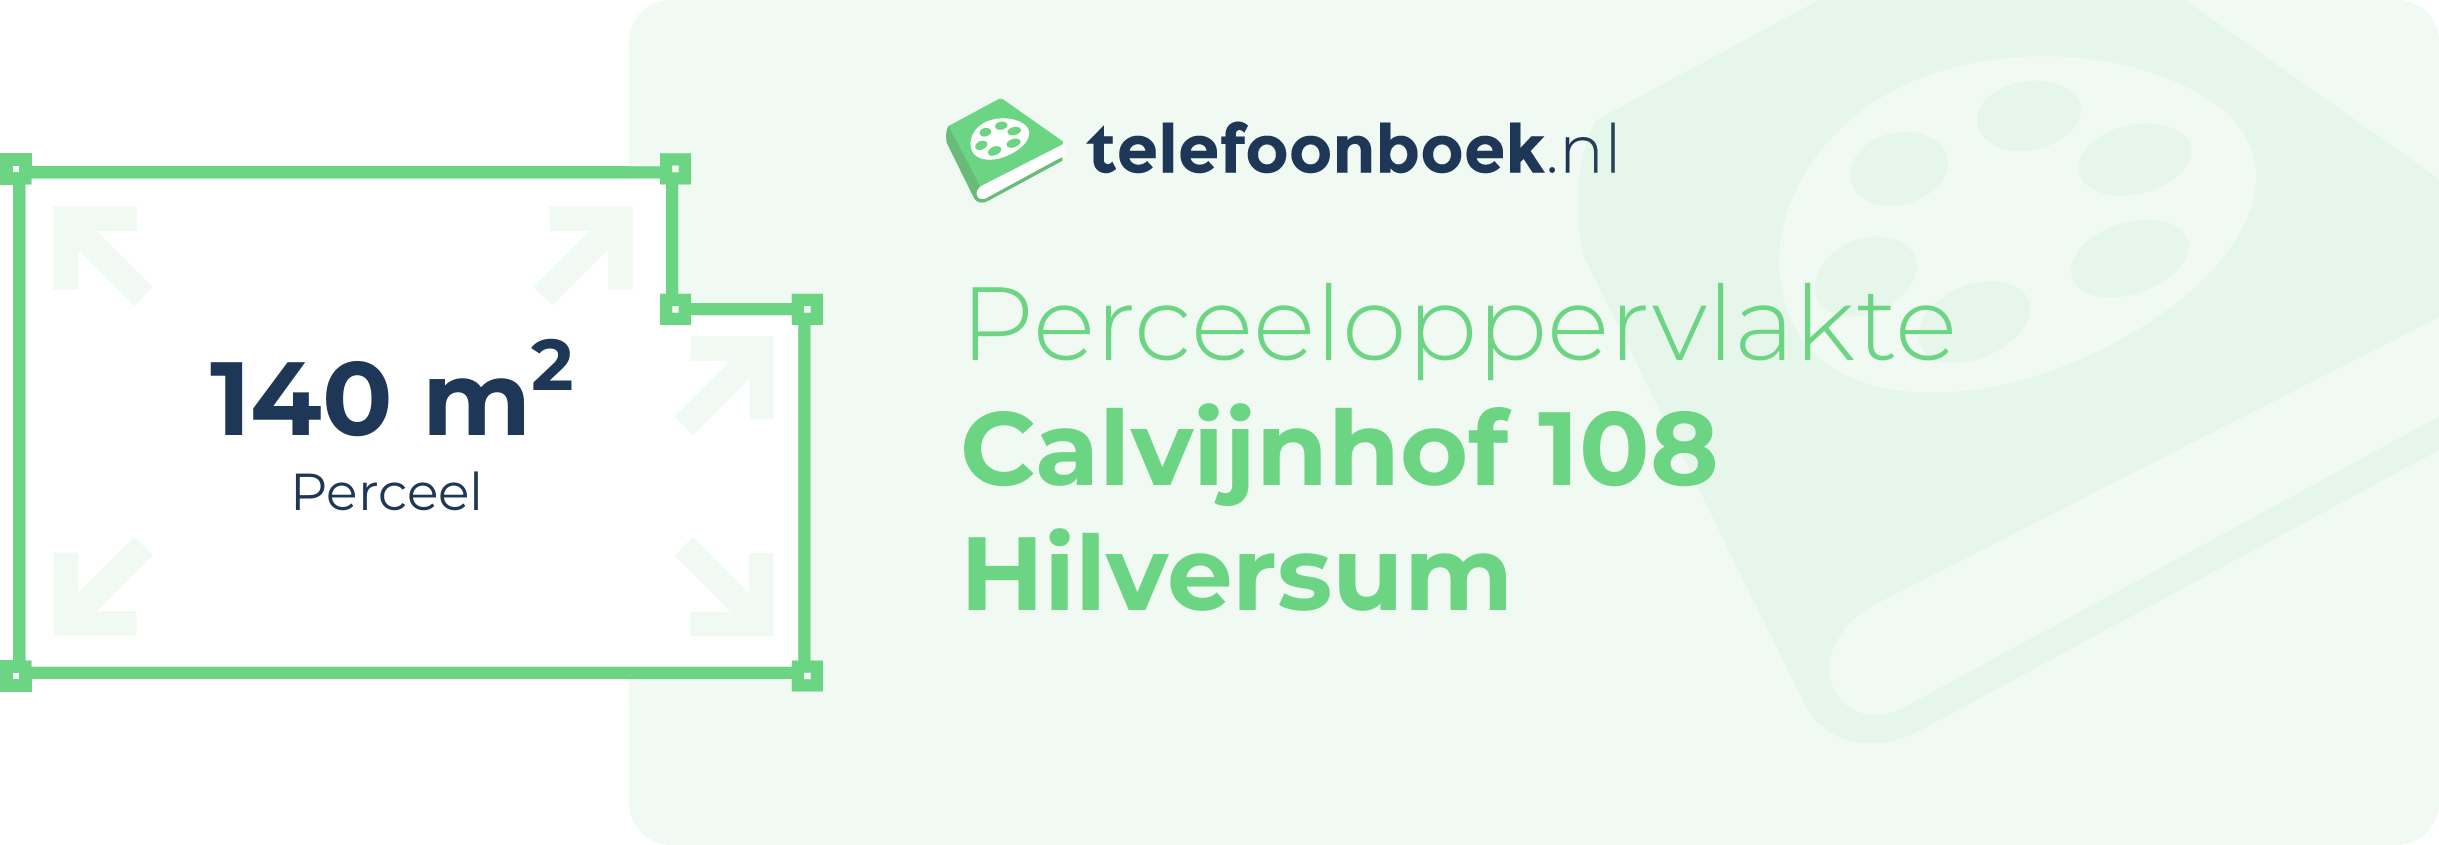 Perceeloppervlakte Calvijnhof 108 Hilversum